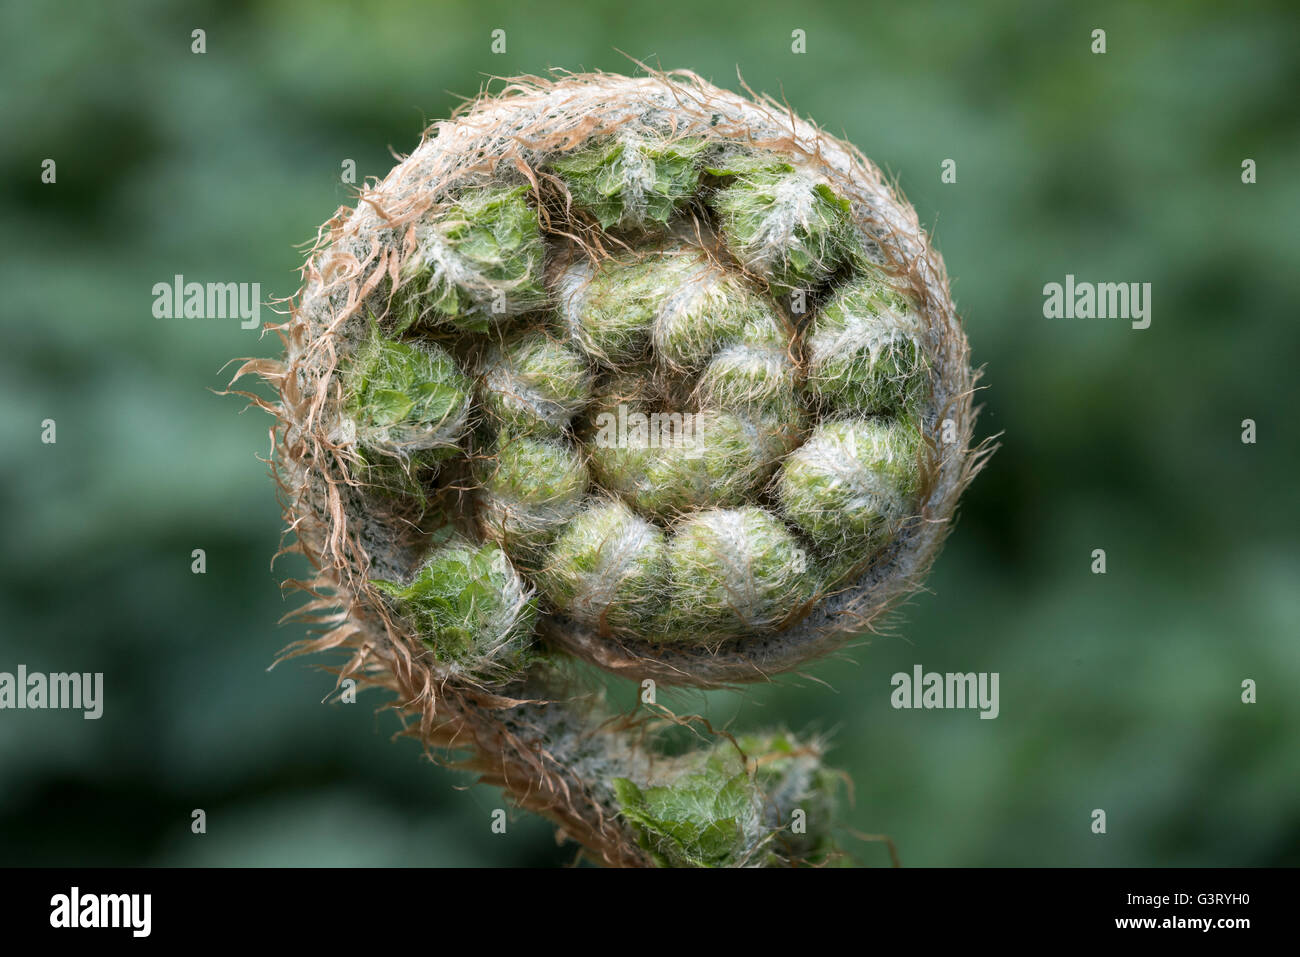 Unfurling fern frond seen in close up. Stock Photo